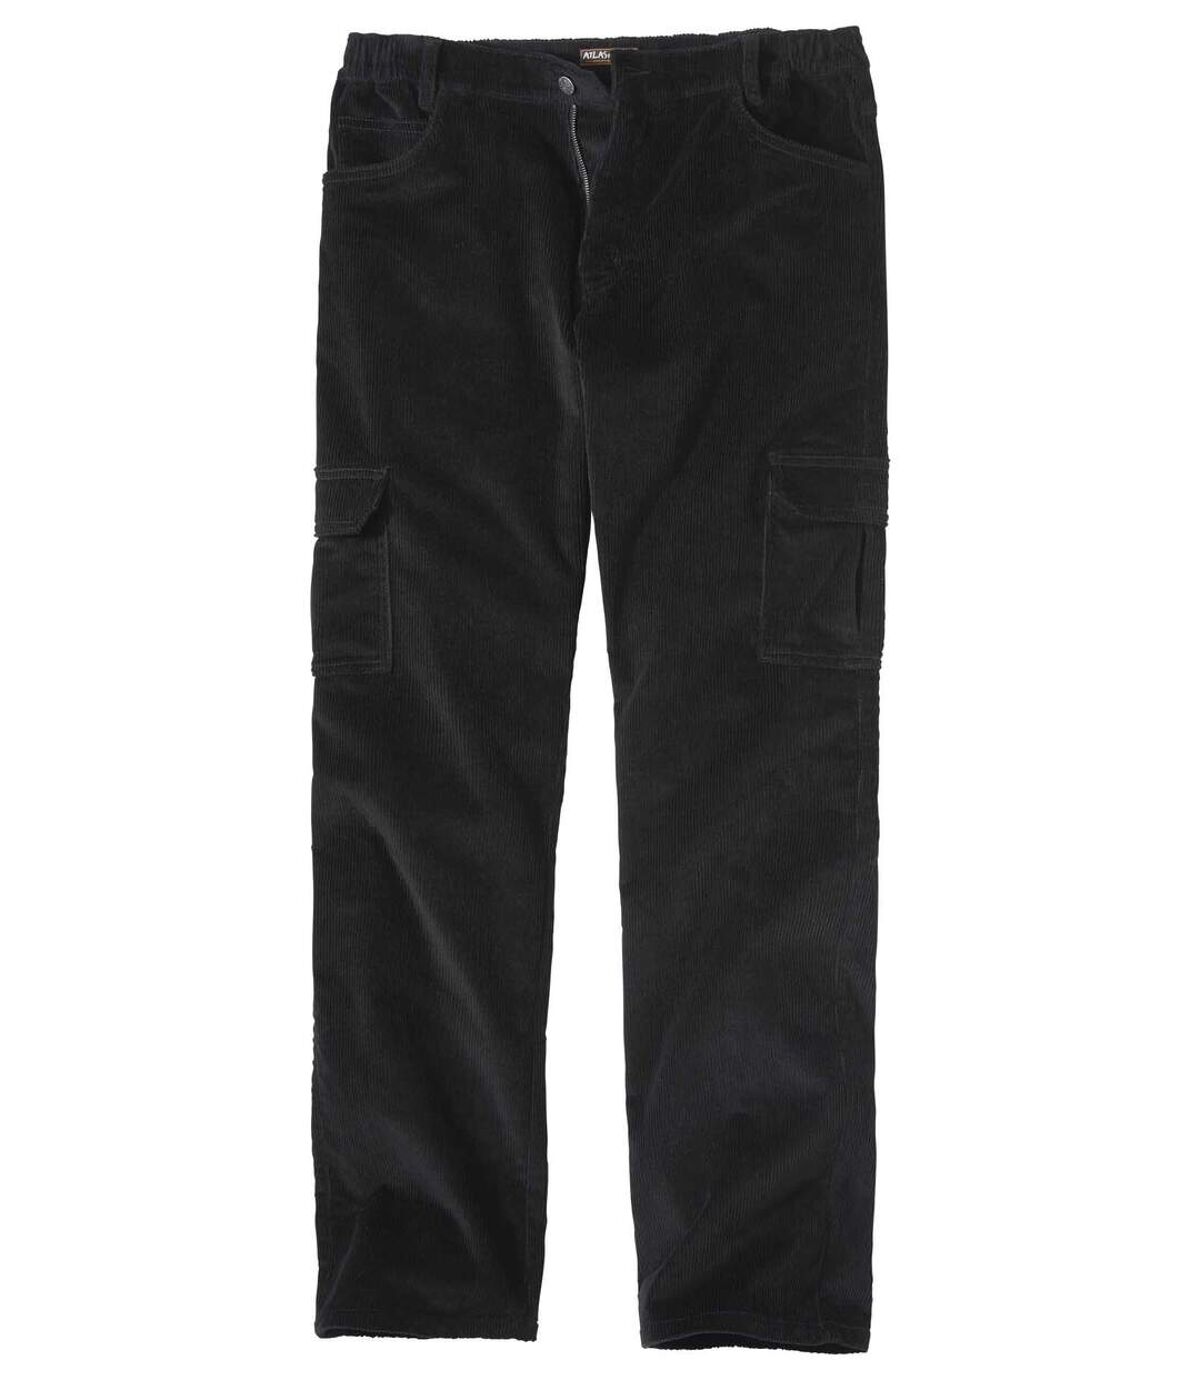 Men’s Black Corduroy Cargo Pants - Stretch Comfort Atlas For Men